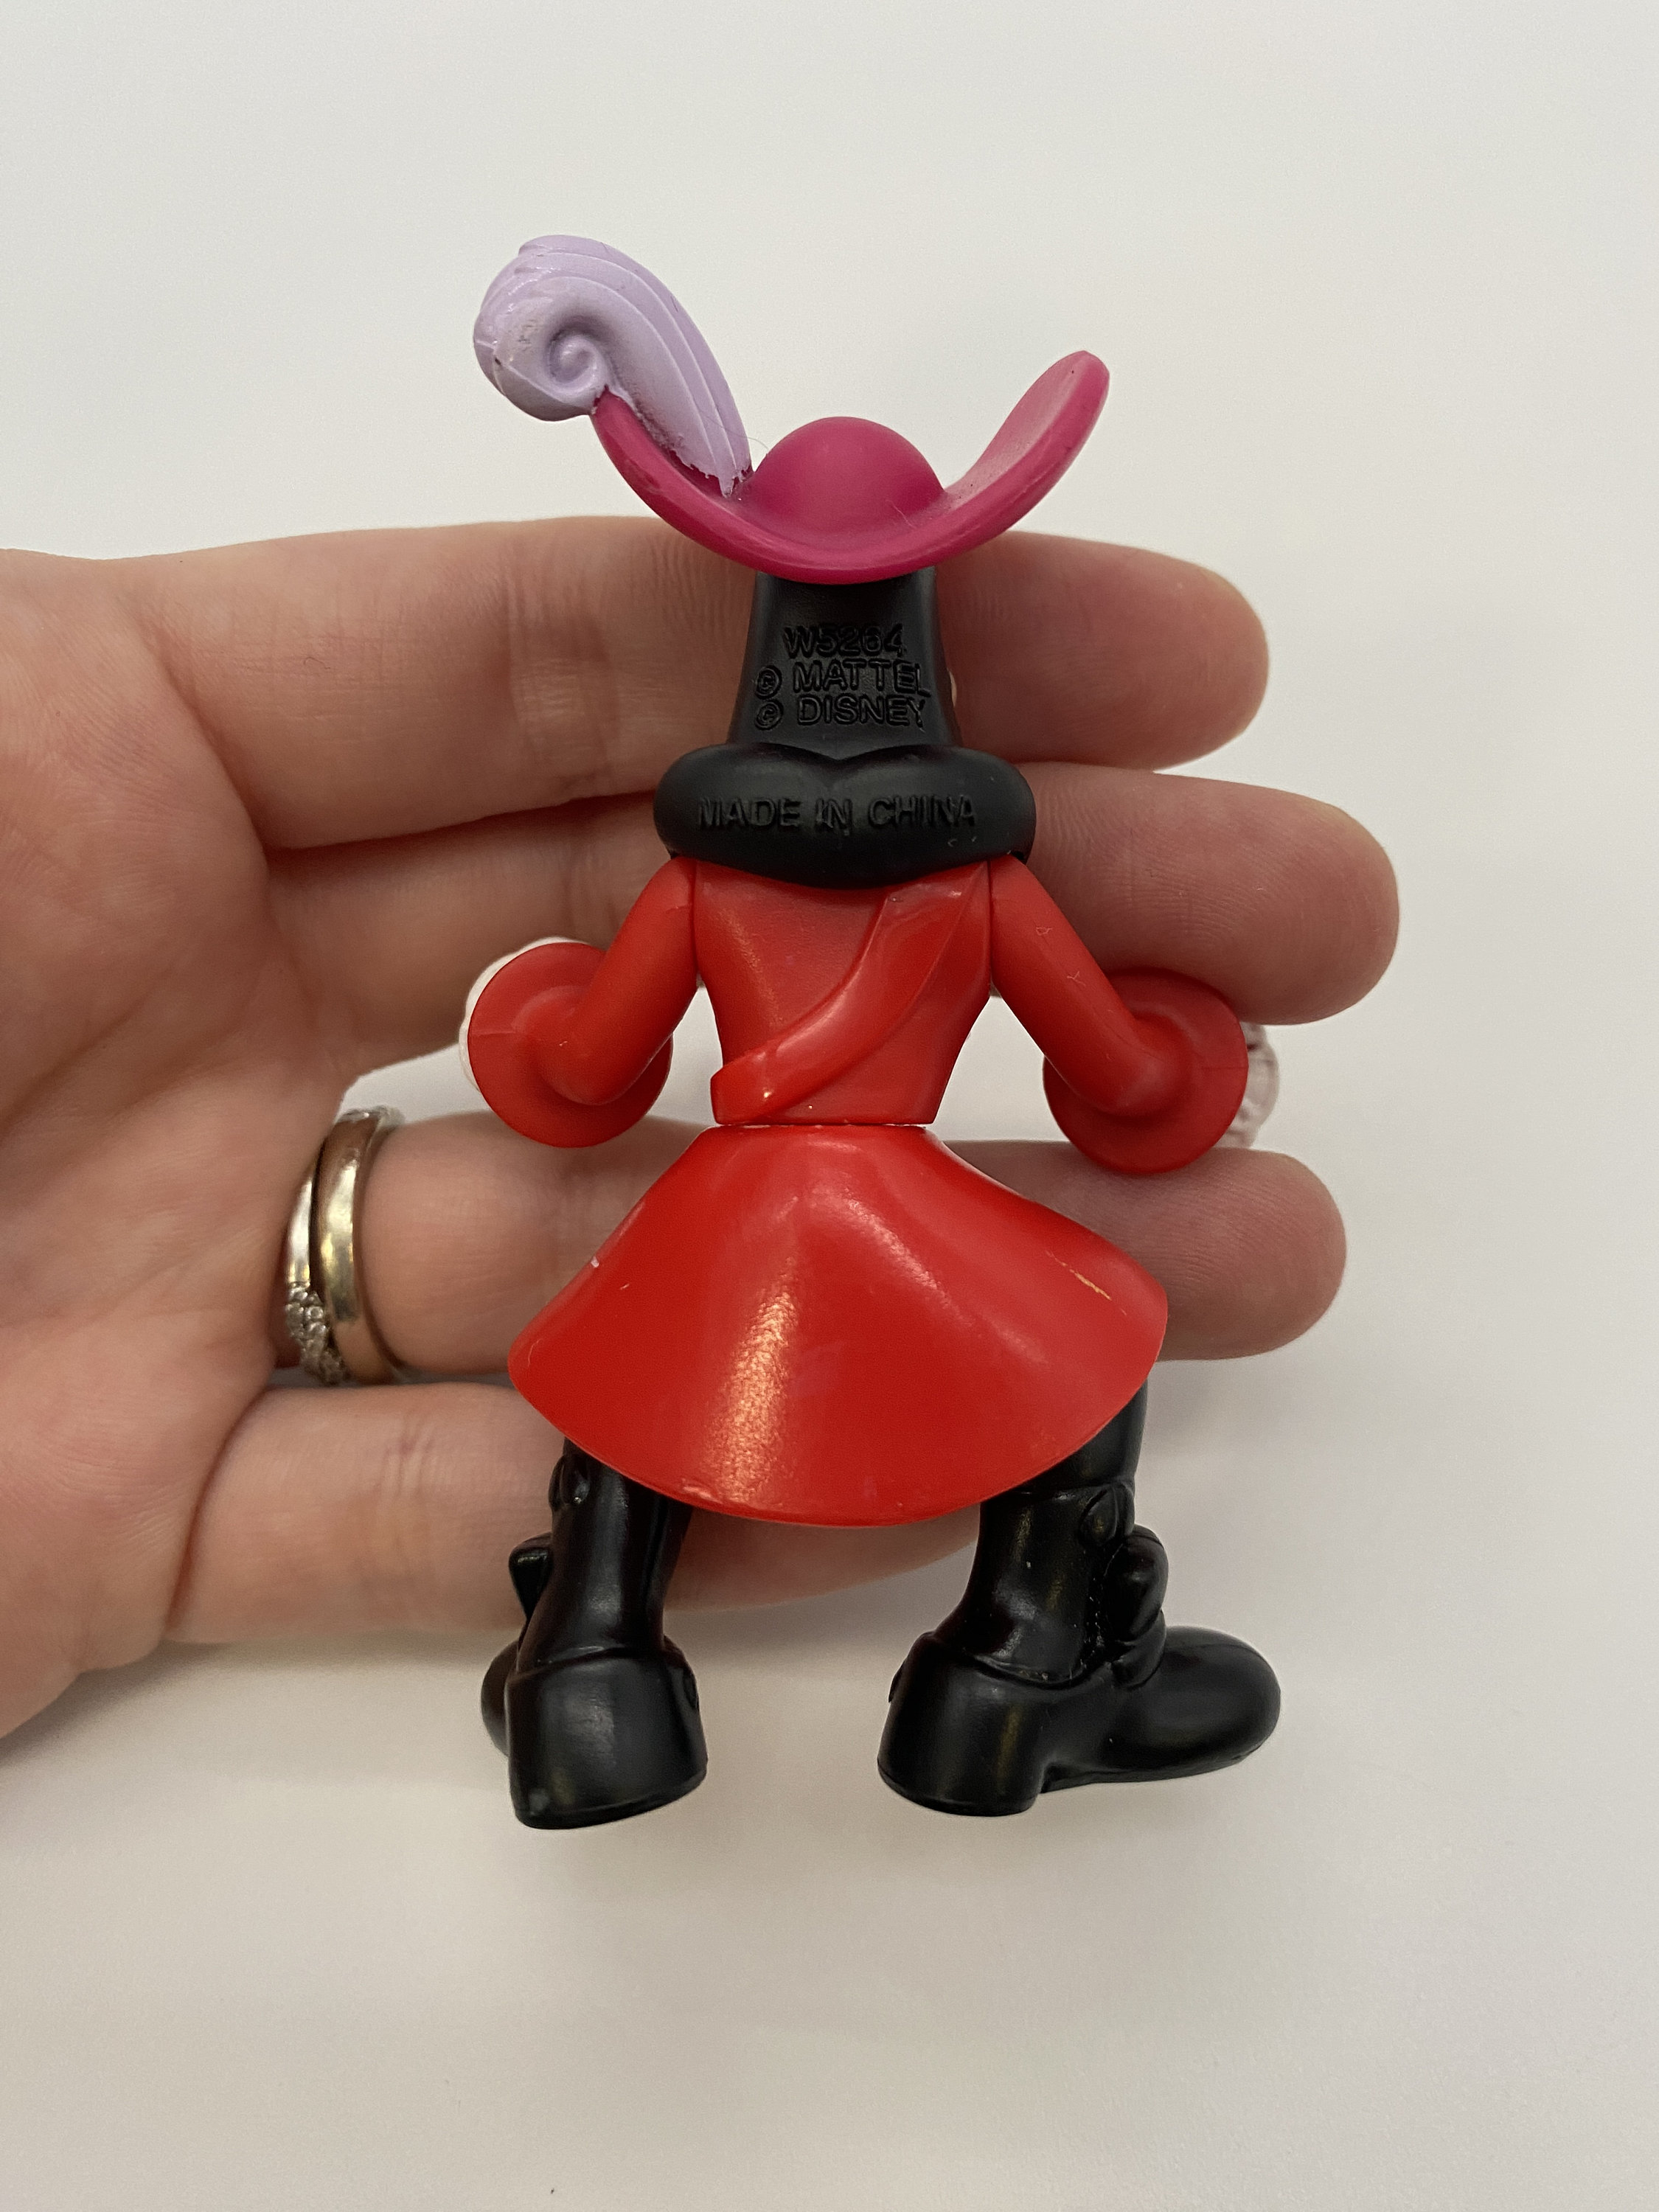 Disney Peter Pan Captain Hook Figurine Toy 